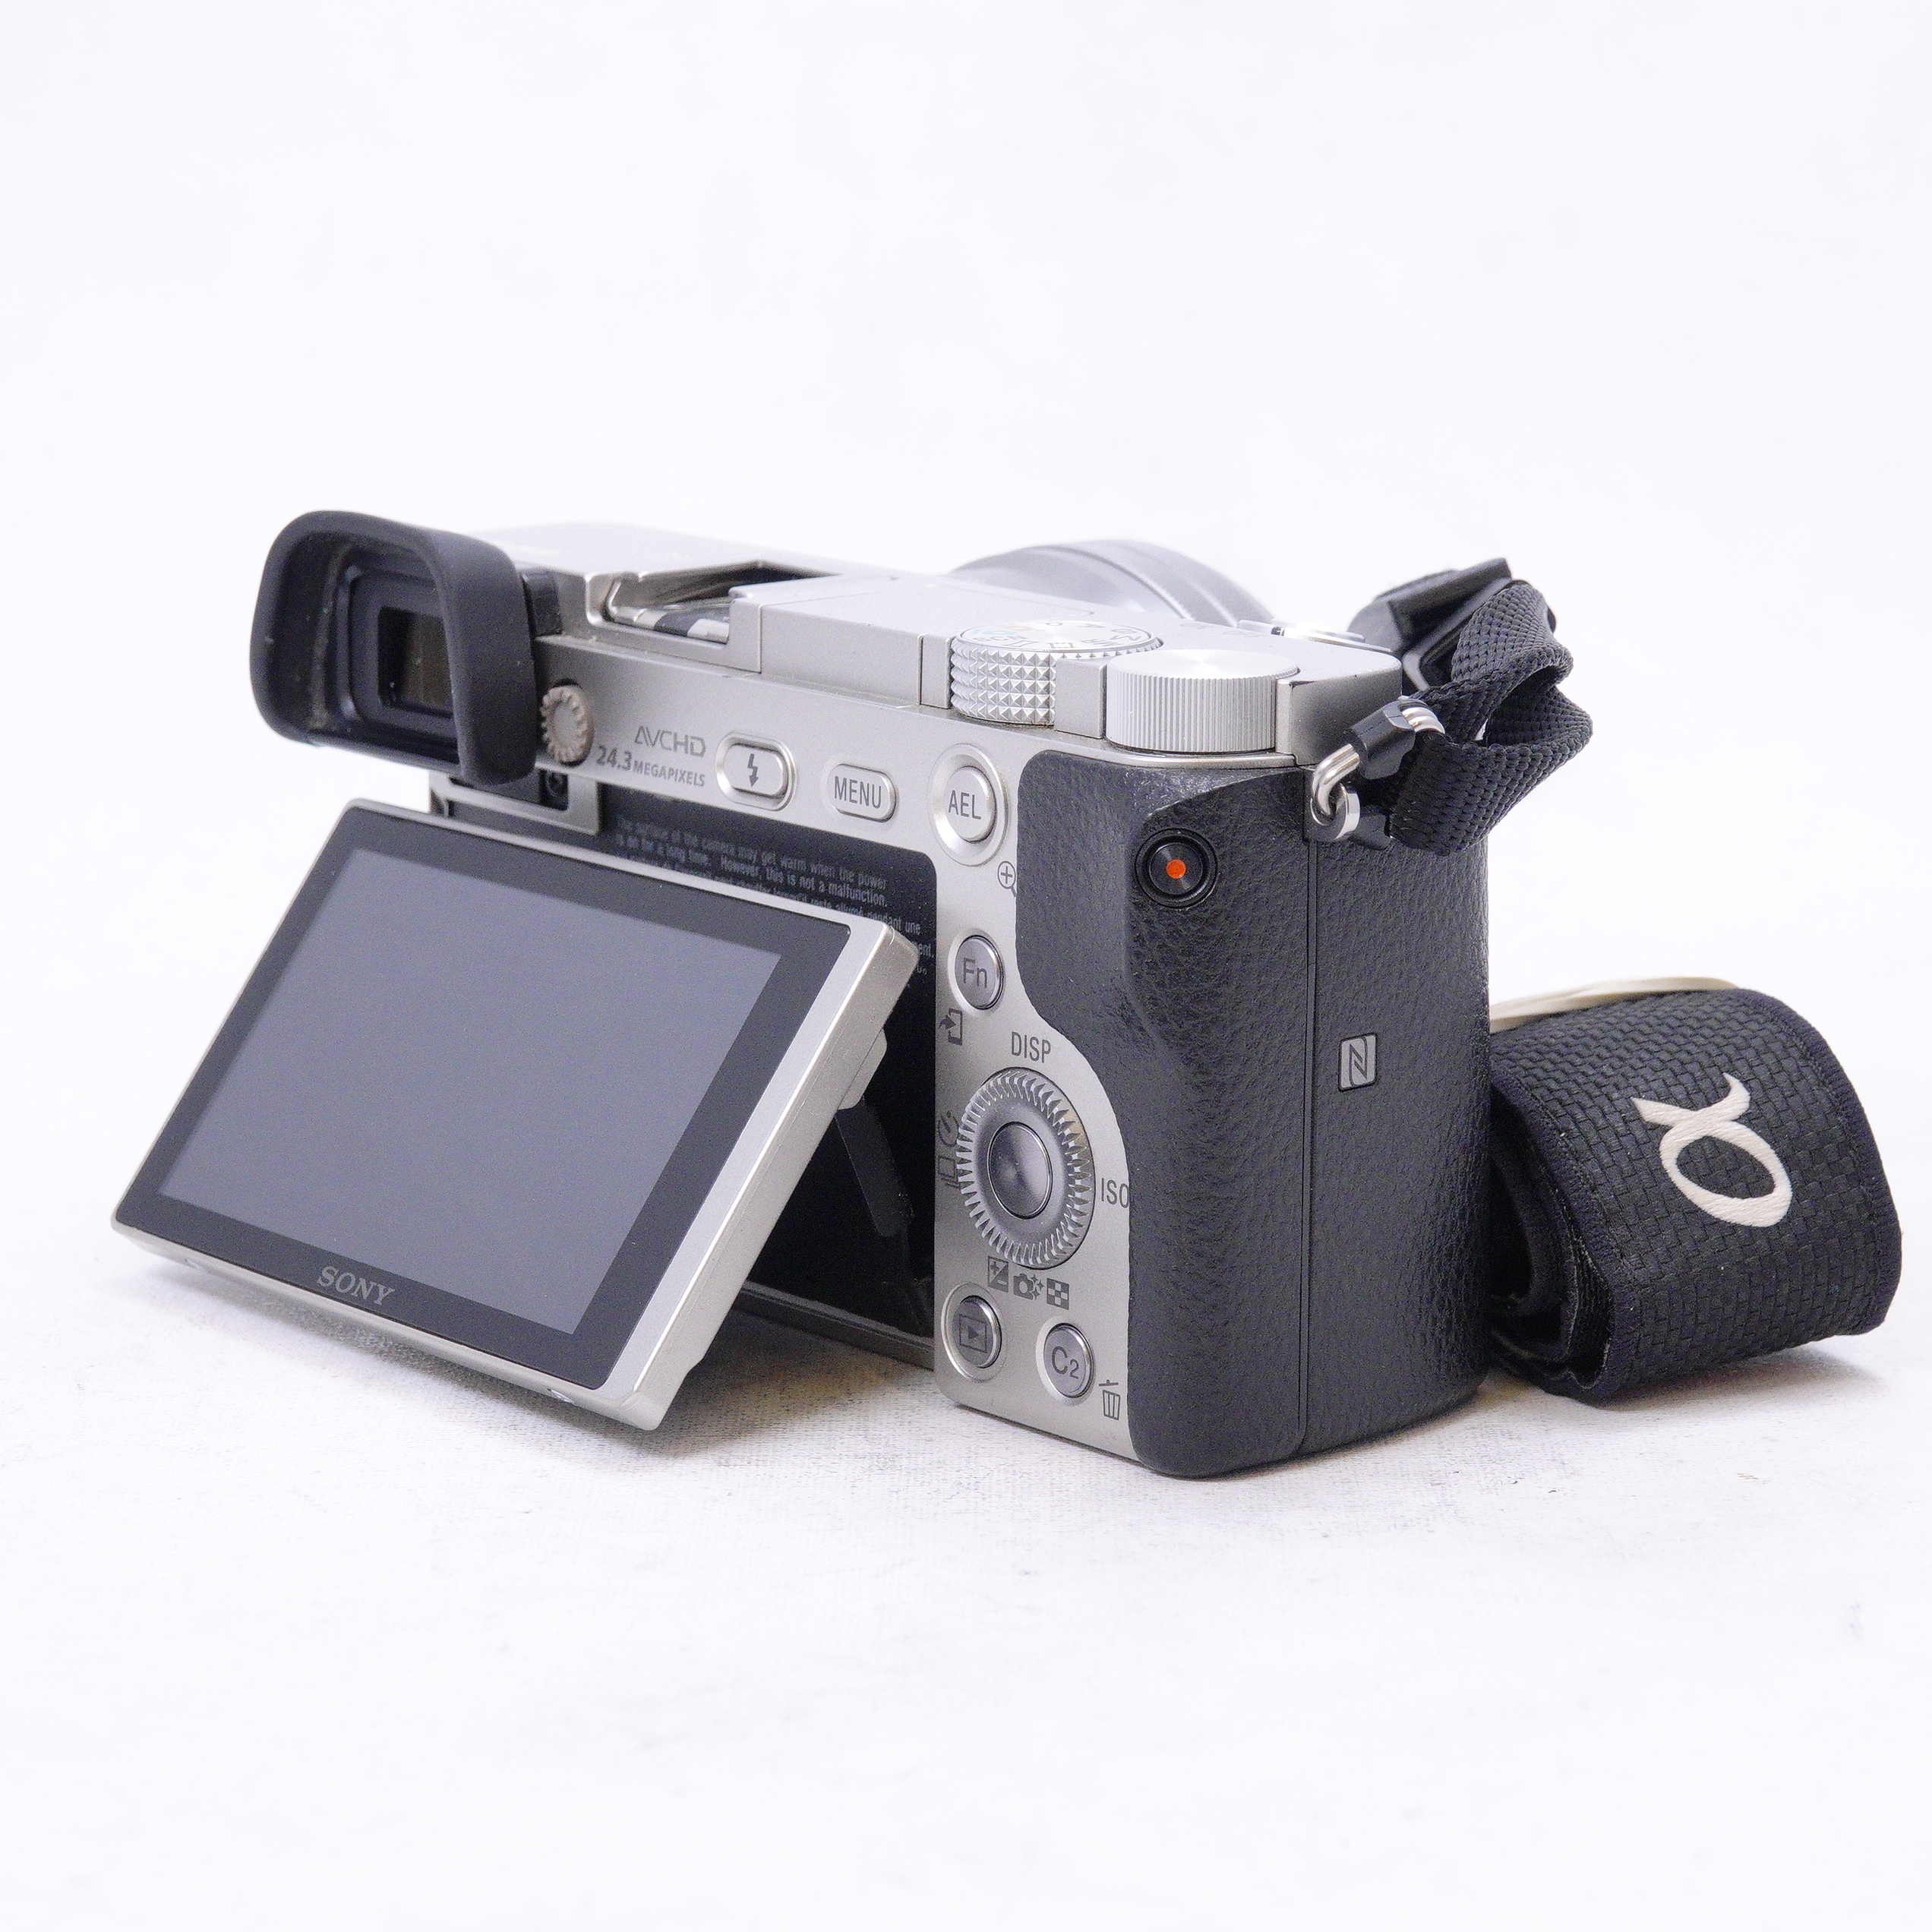 Cámara Digital Sony Alpha a6000 24.3 MP Mirrorless con Lentes 16-50mm Negro